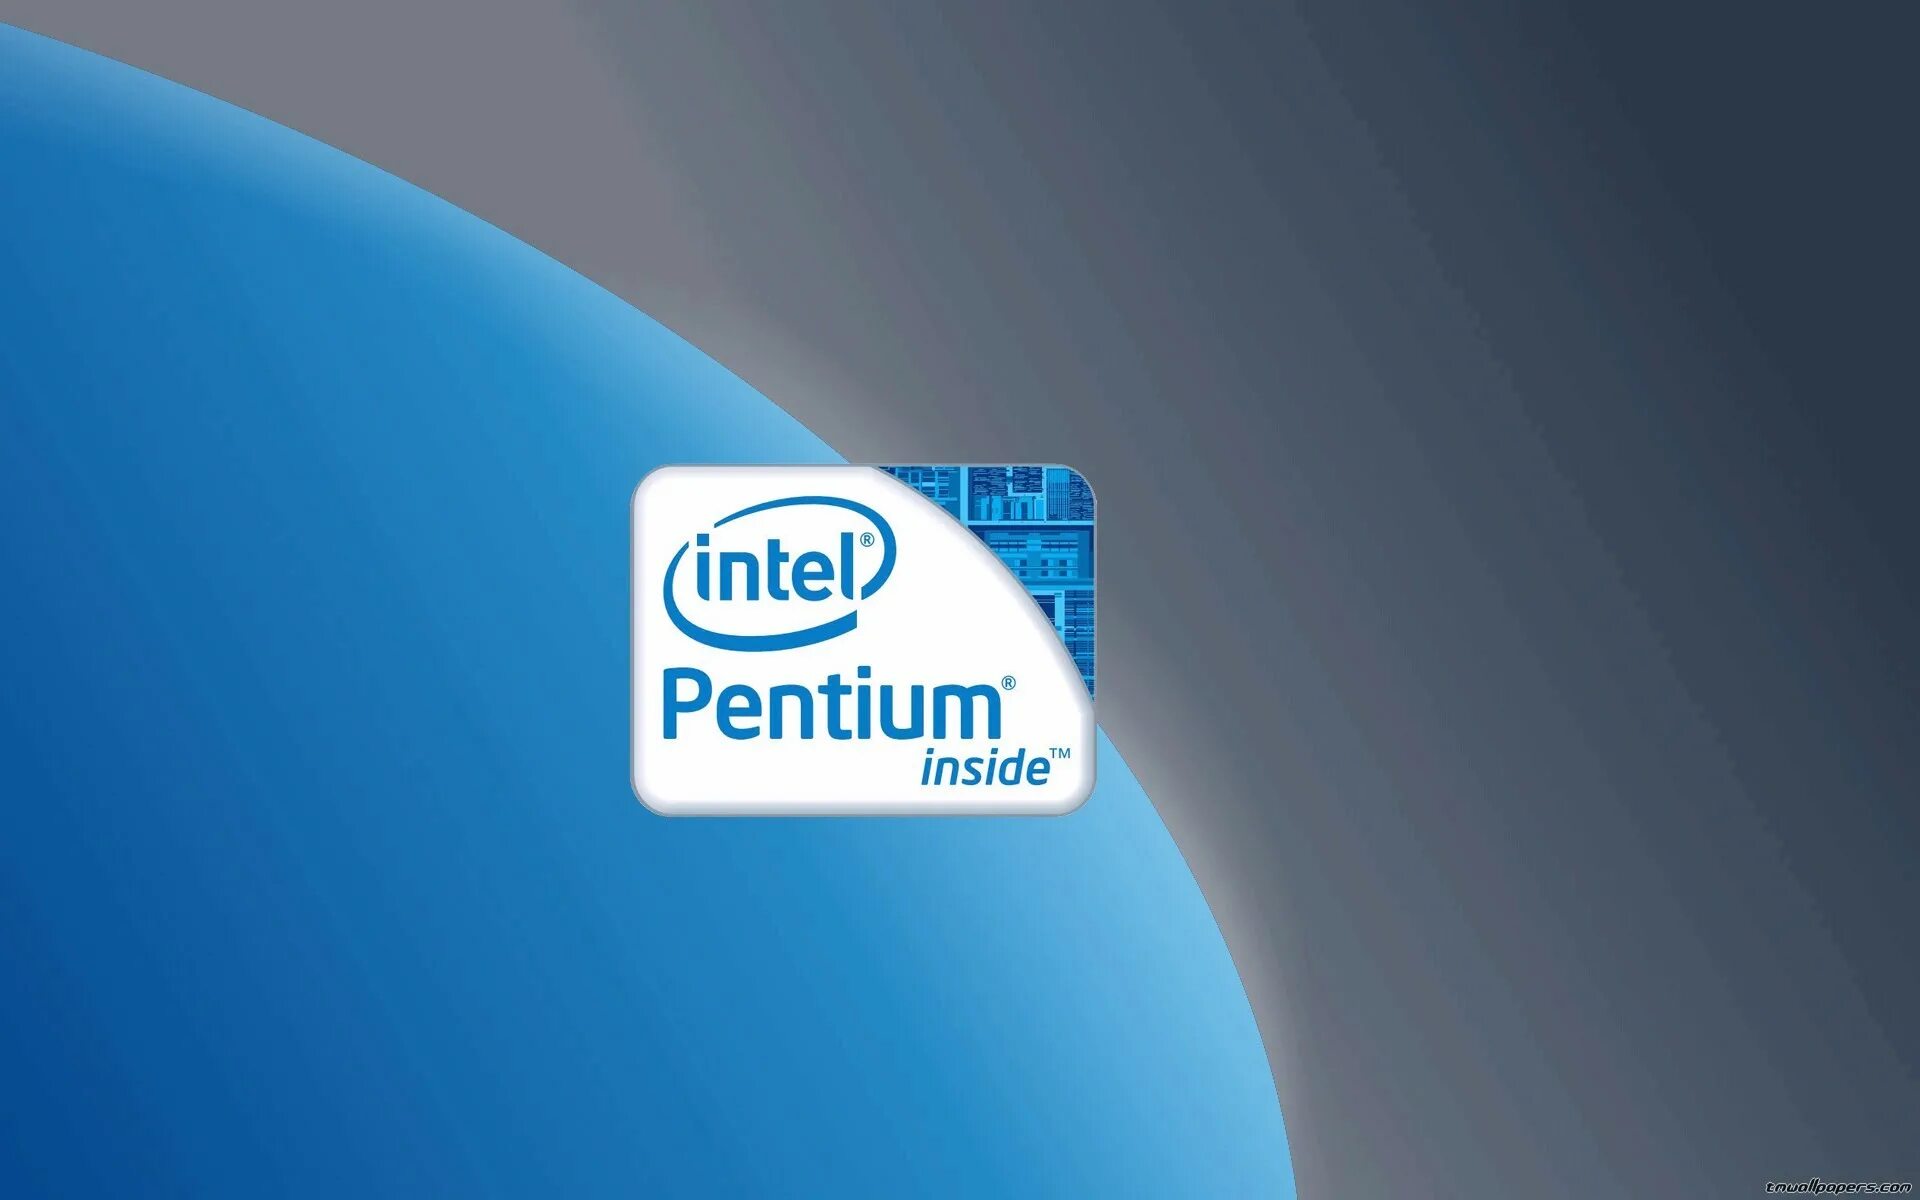 Выбирайте интел. Интел. Интел пентиум инсайд. Intel Pentium inside. Логотип Intel inside.